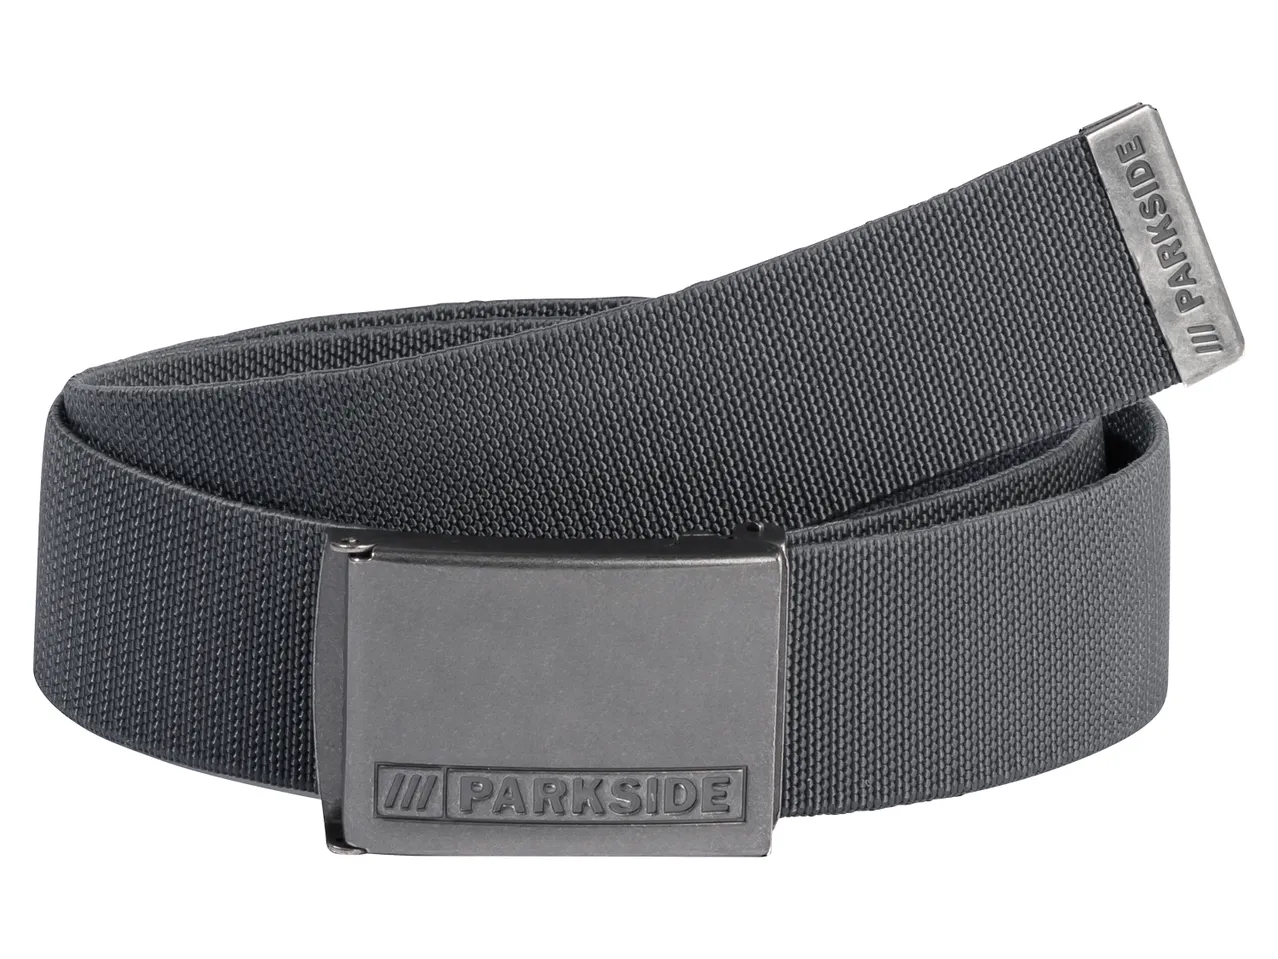 Cintura , prezzo 5.99 EUR  
Cintura  Girovita: 80-155 cm  
-  Con chiusura metallica